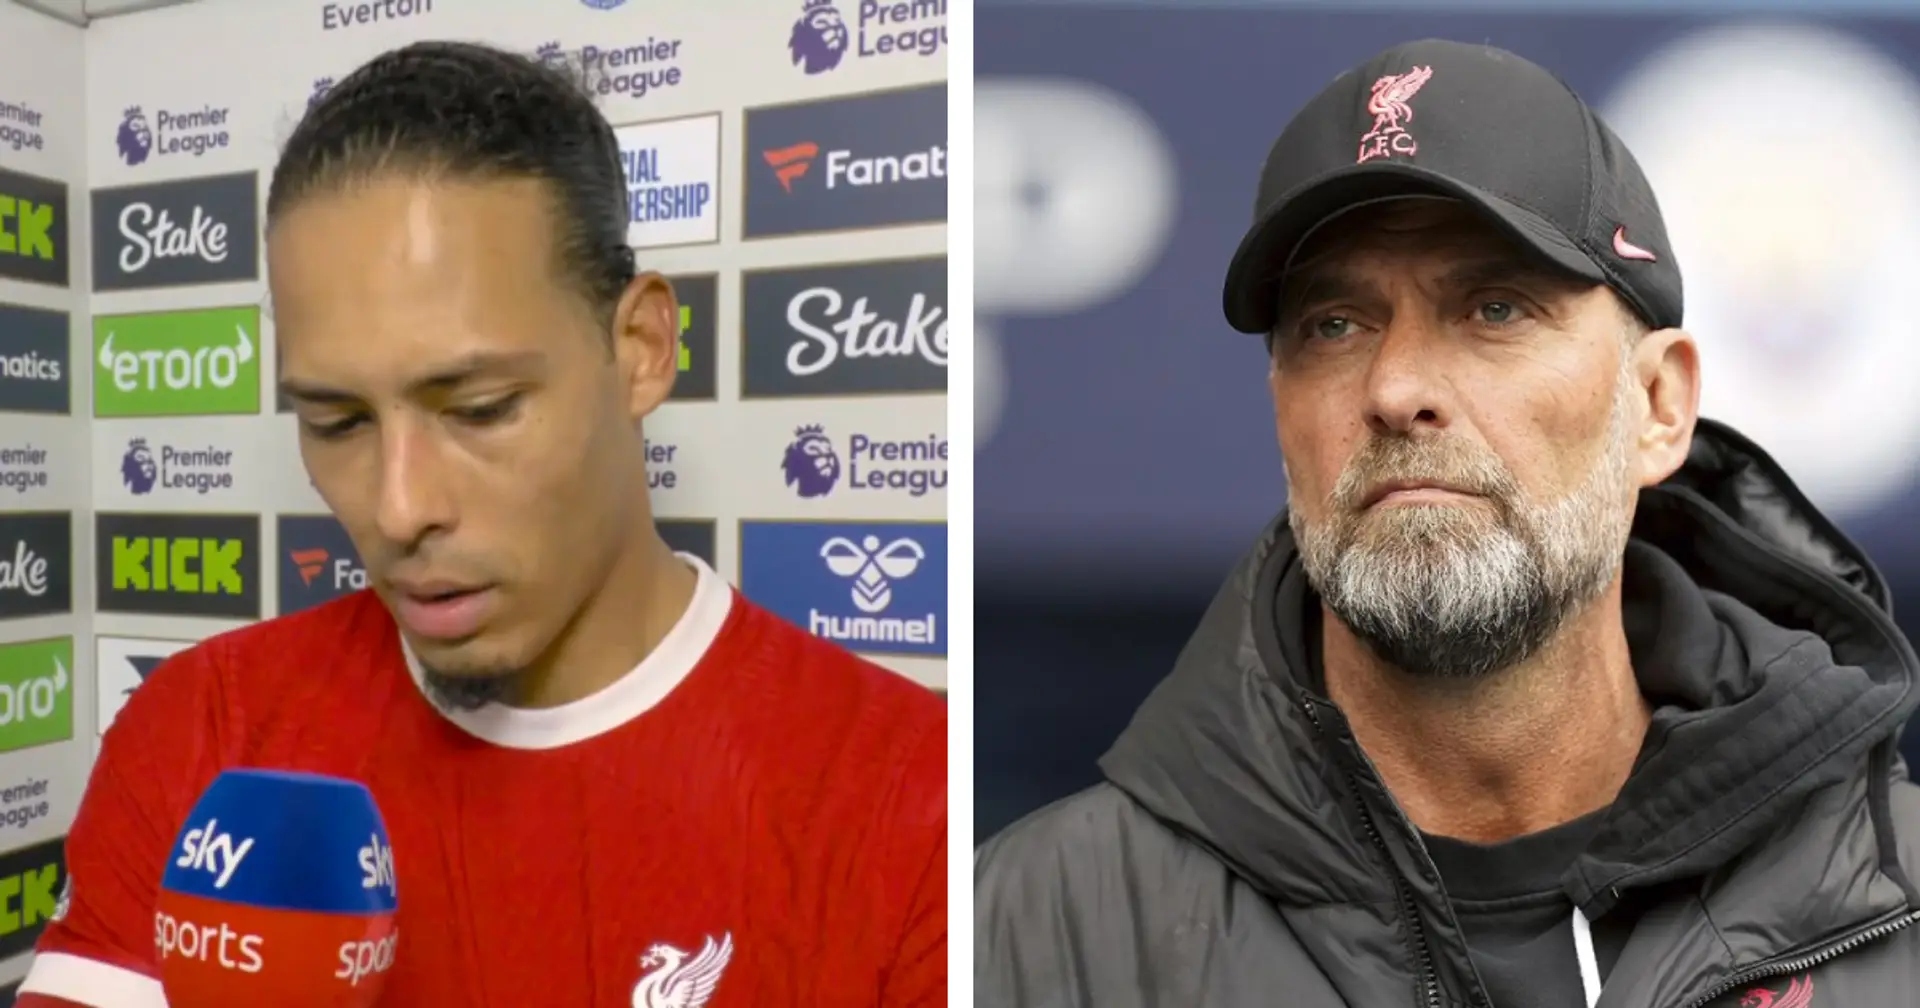 'I'm really proud': Virgil van Dijk on his emotions ahead of last Liverpool games under Jurgen Klopp